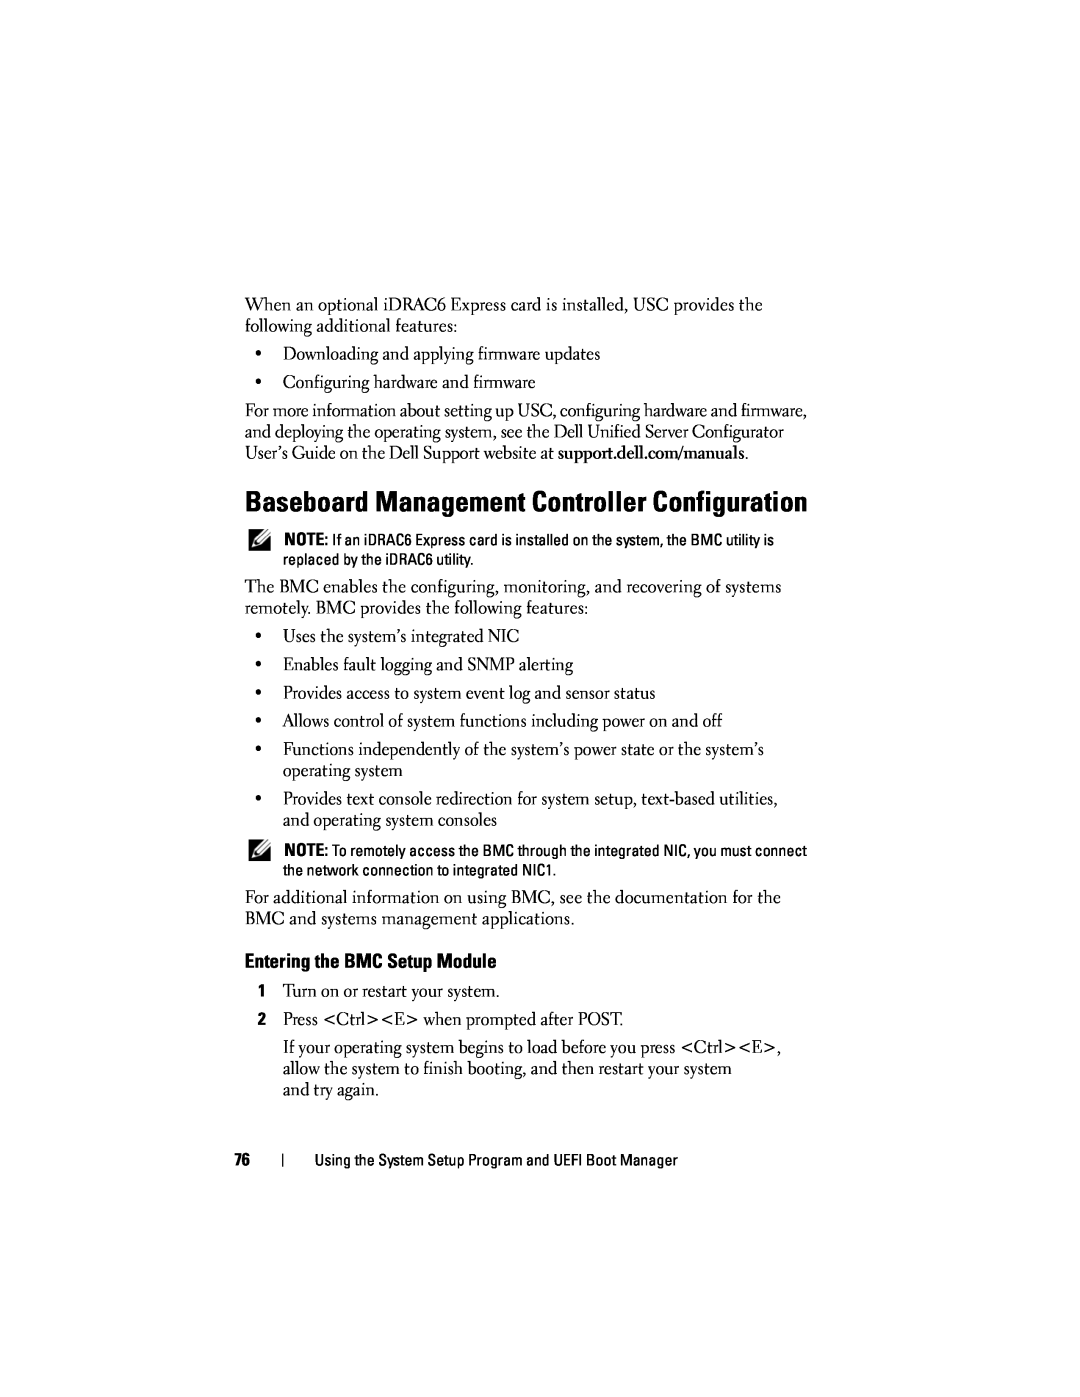 Dell T310 owner manual Baseboard Management Controller Configuration, Entering the BMC Setup Module 